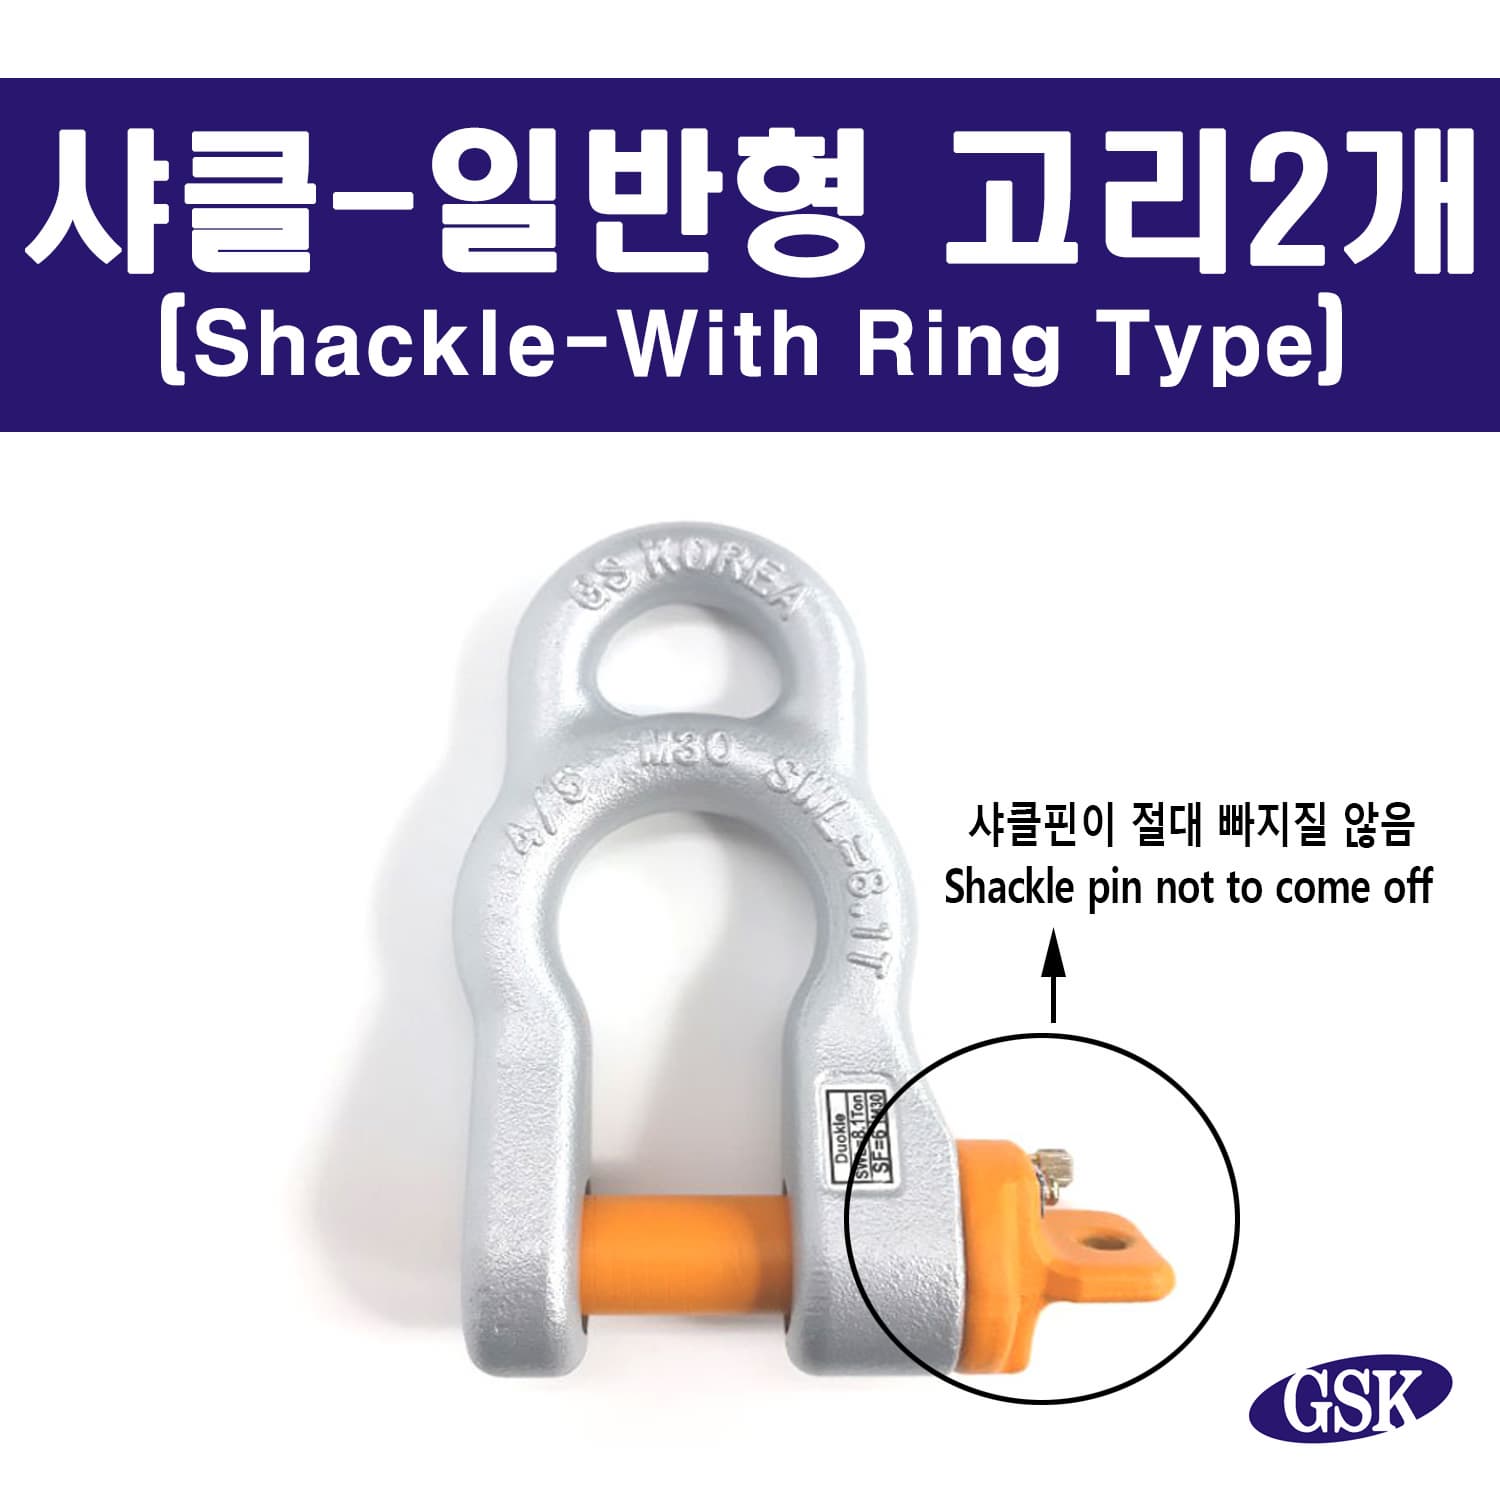 GSK KOREA LOCK SHACKLE_TWO RINGS